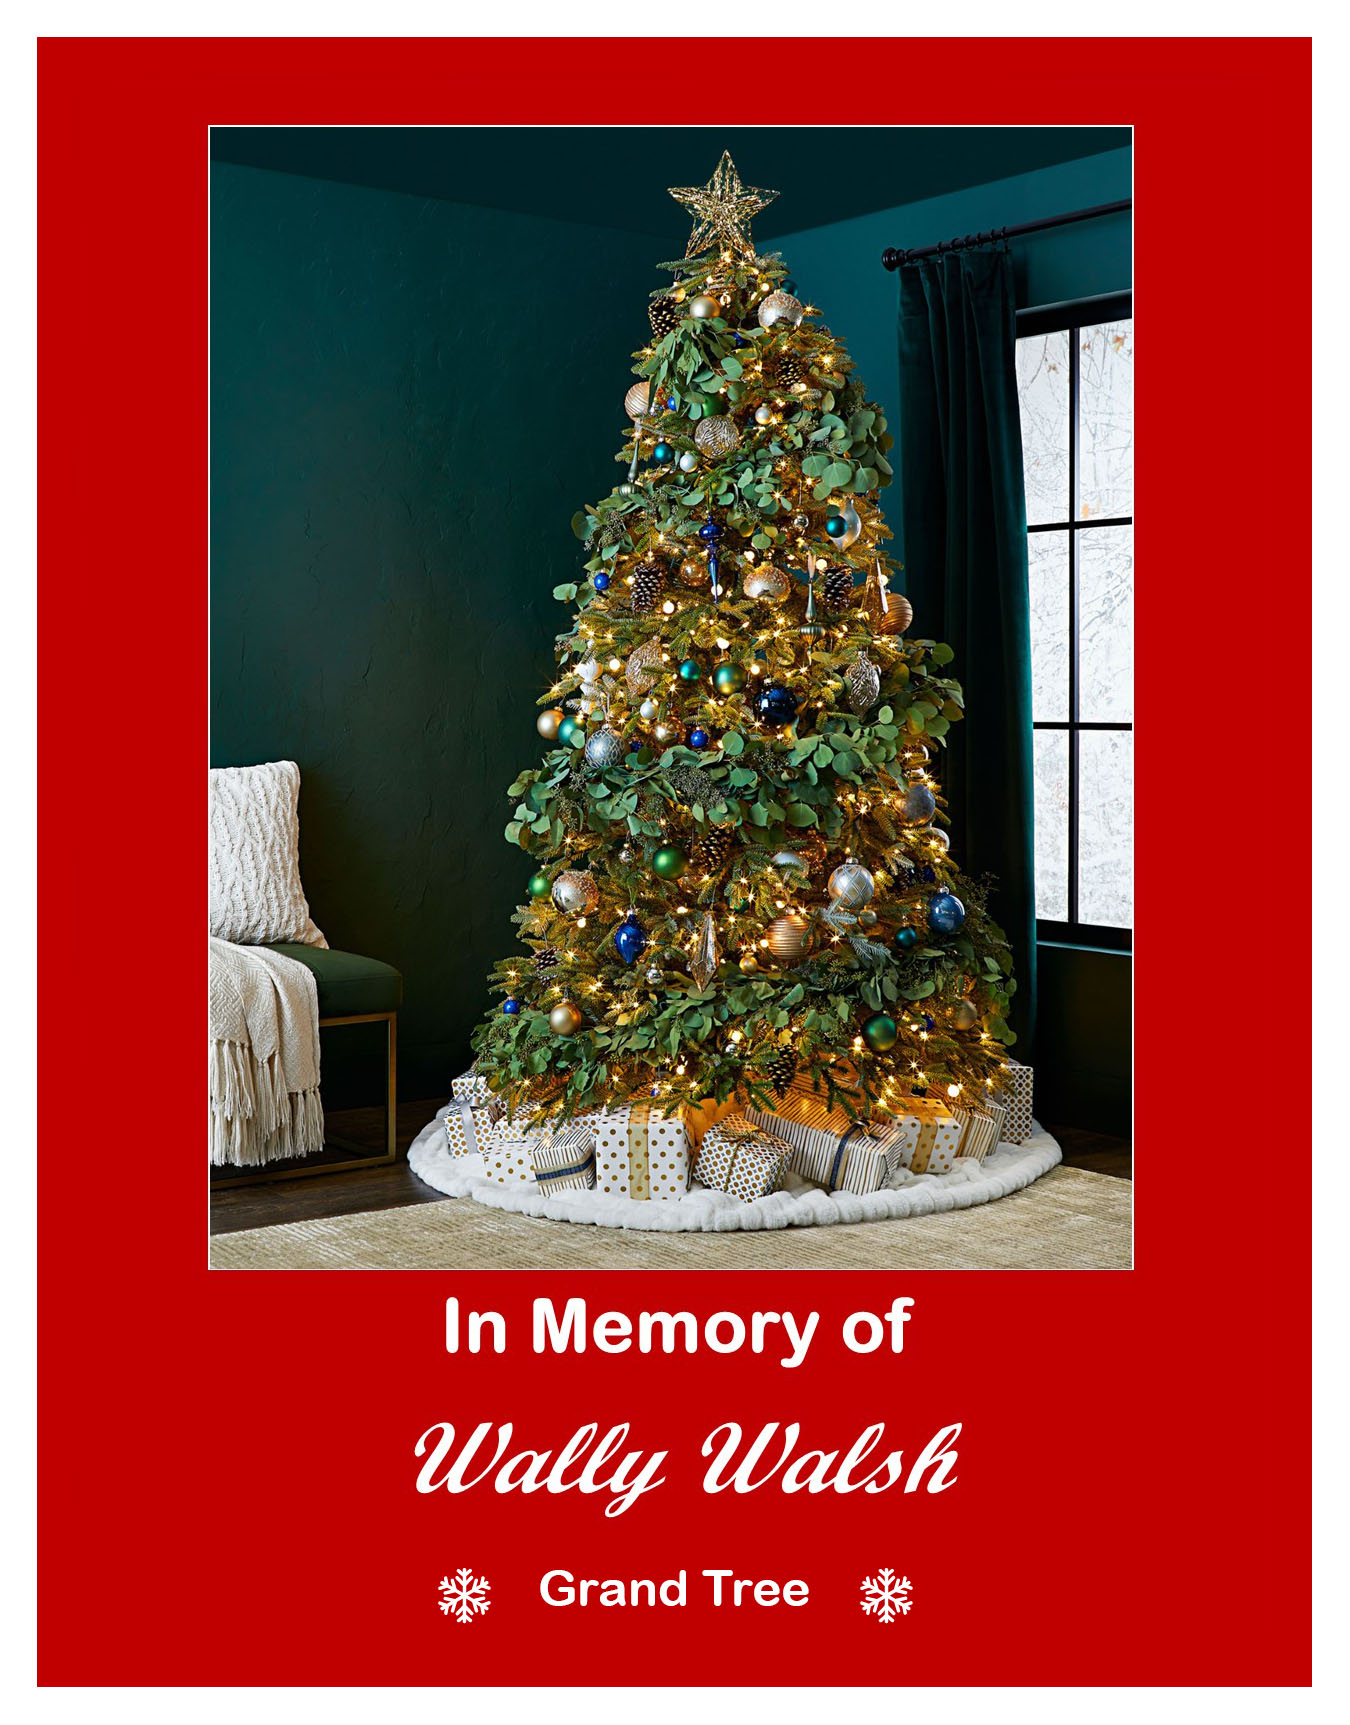 In memory of Wally Walsh